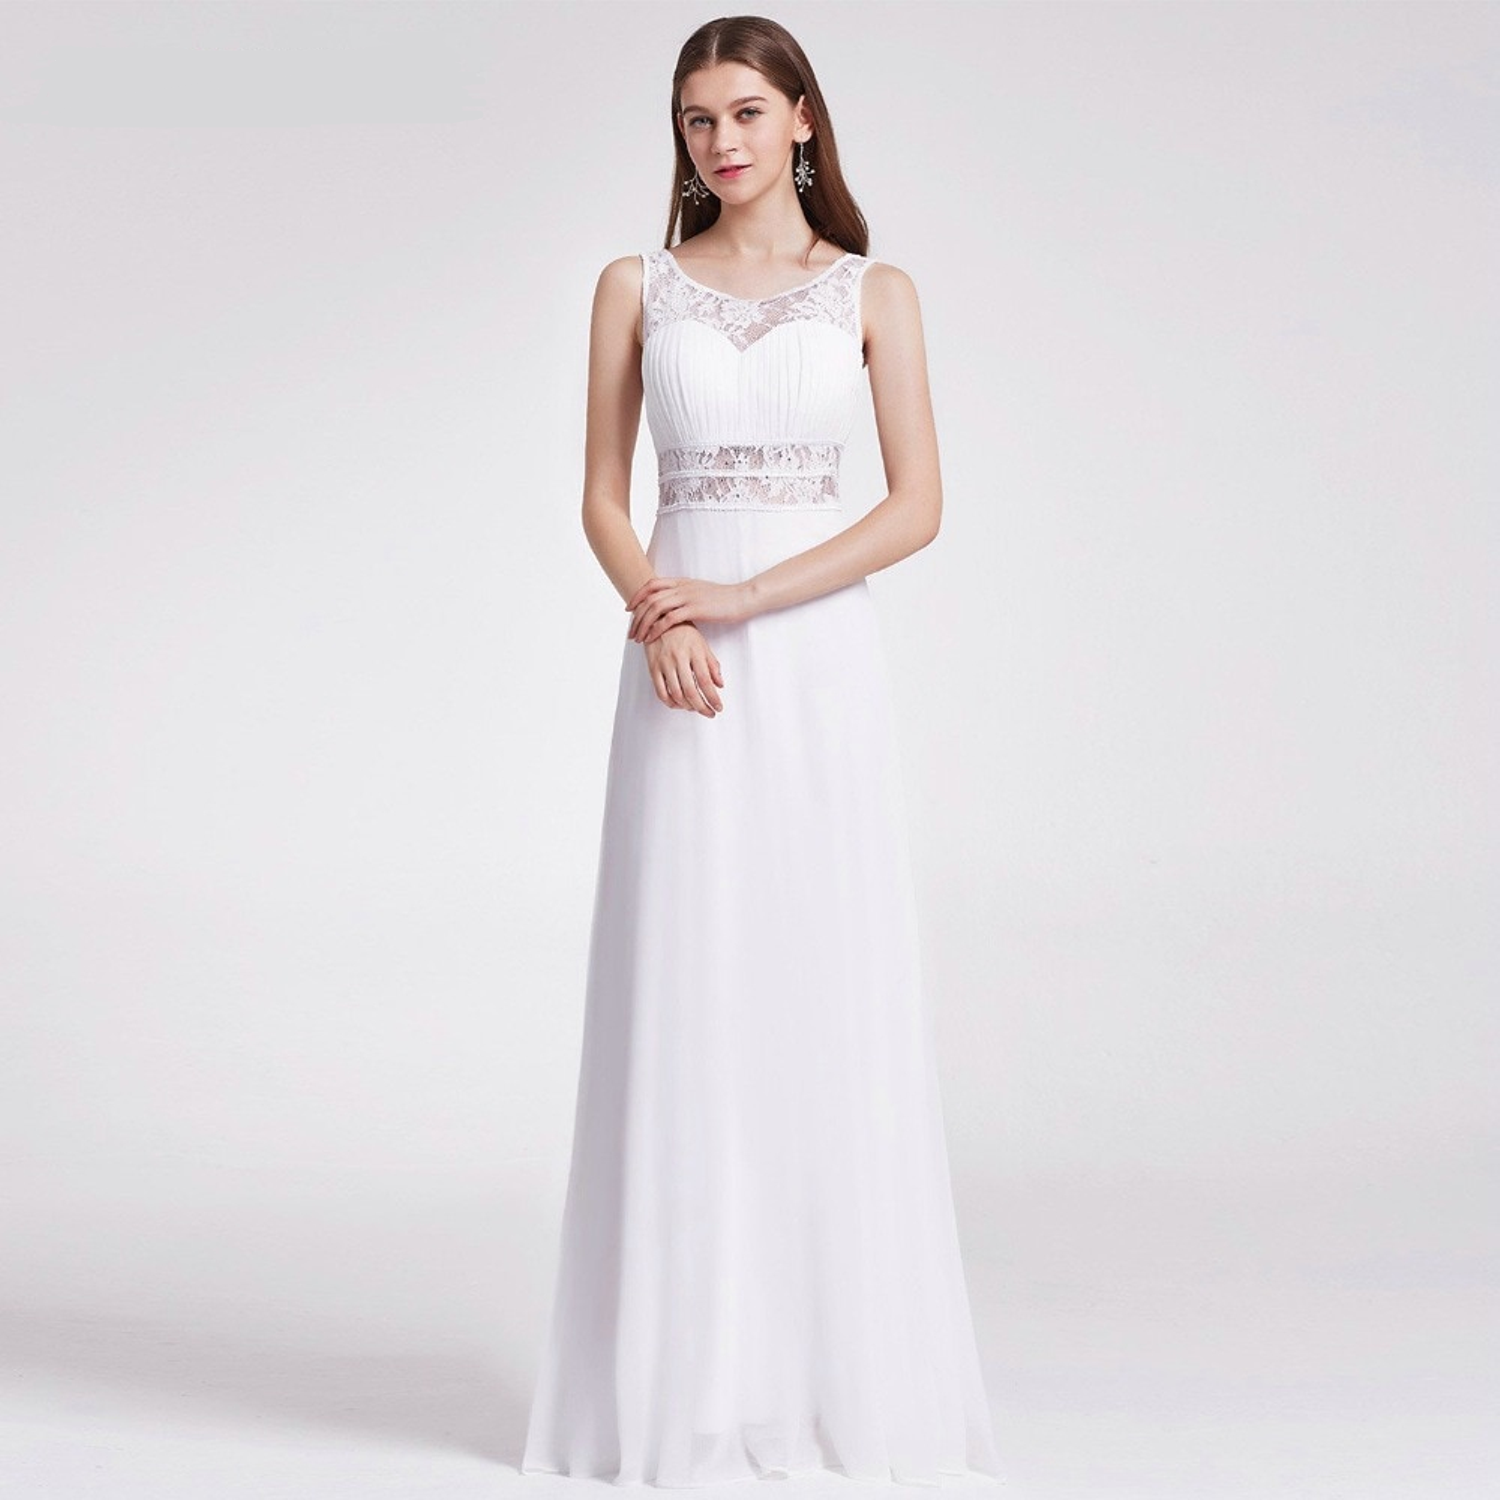 Elegant Wedding Dress with Lace Details